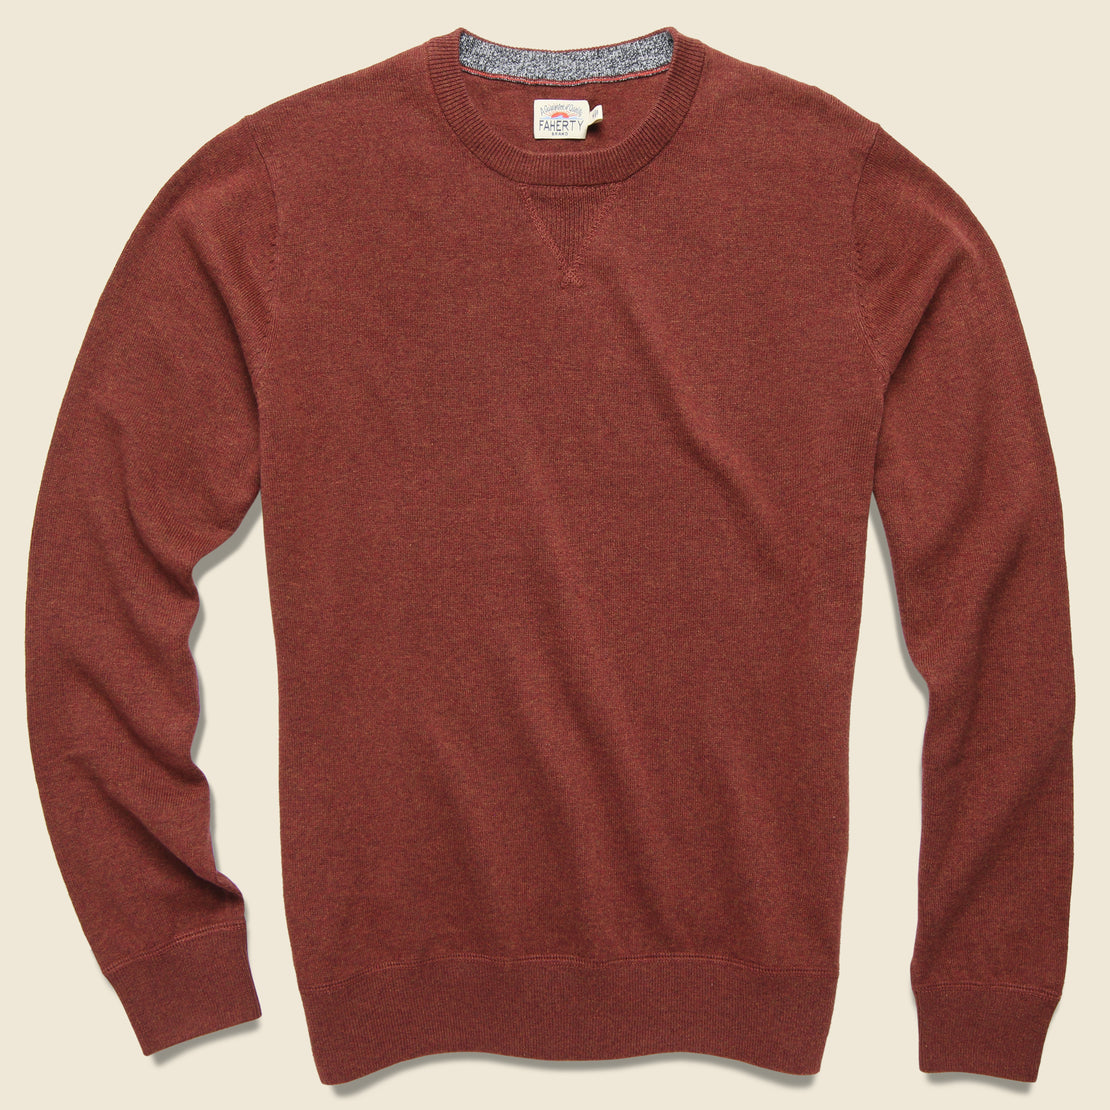 Faherty Sconset Crew Sweater - Autumn Rust